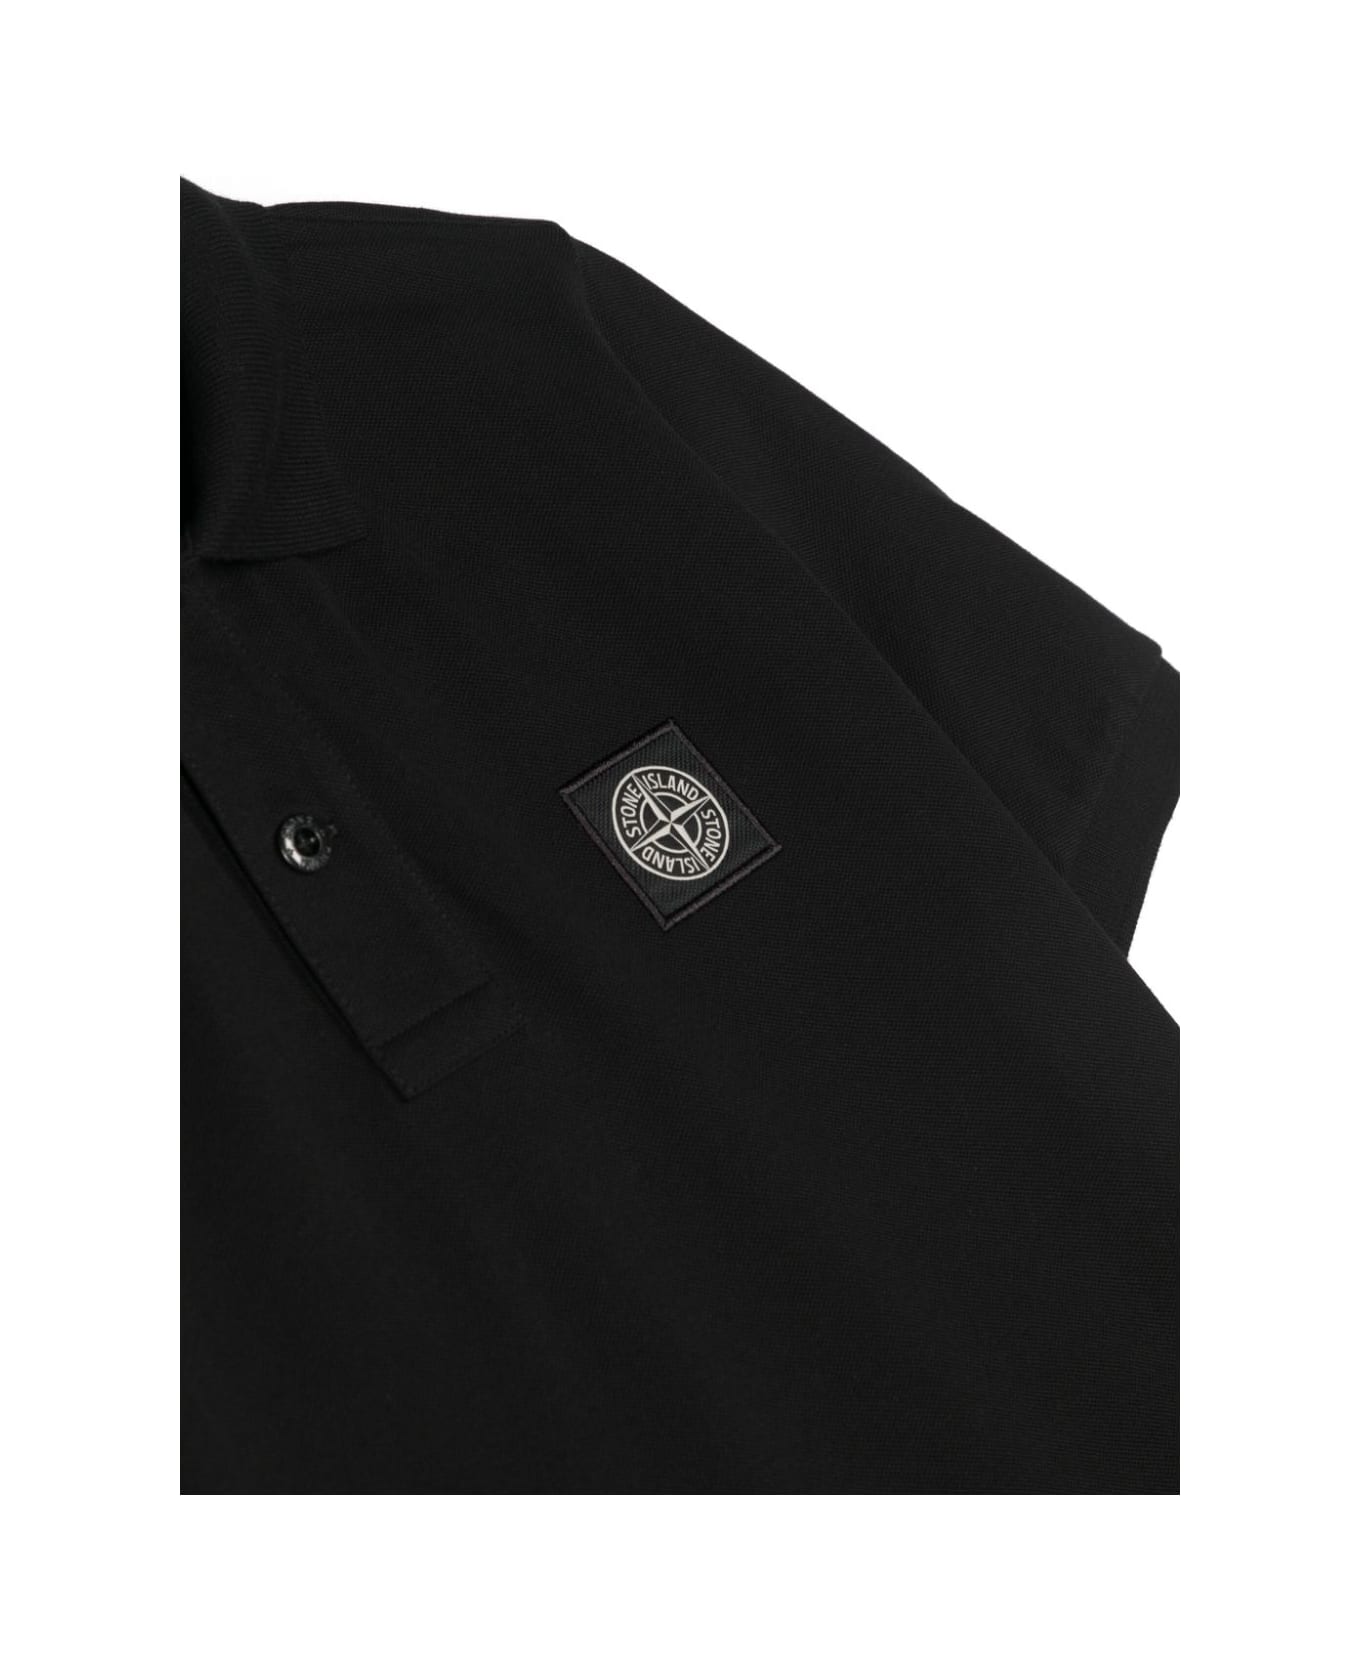 Stone Island Junior Polo Shirt - Black